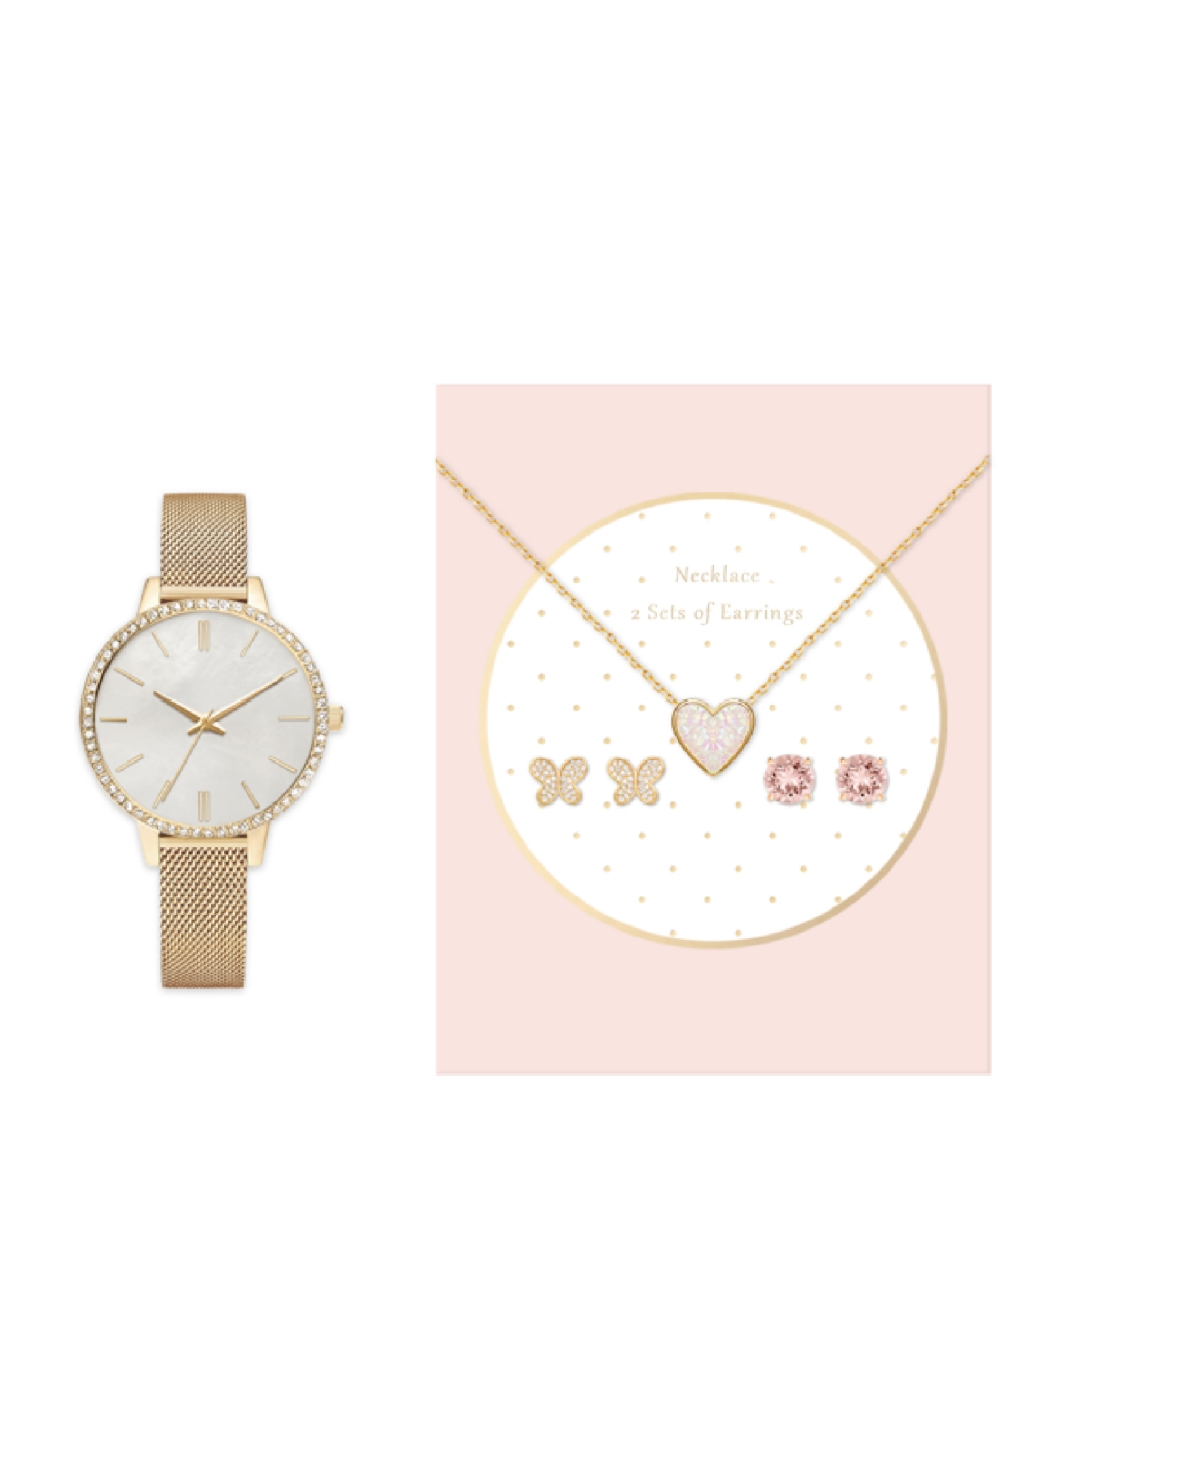 Jessica Carlyle Women's Quartz Shiny Gold-tone Mesh Watch 35mm Gift Set, 4 Pieces